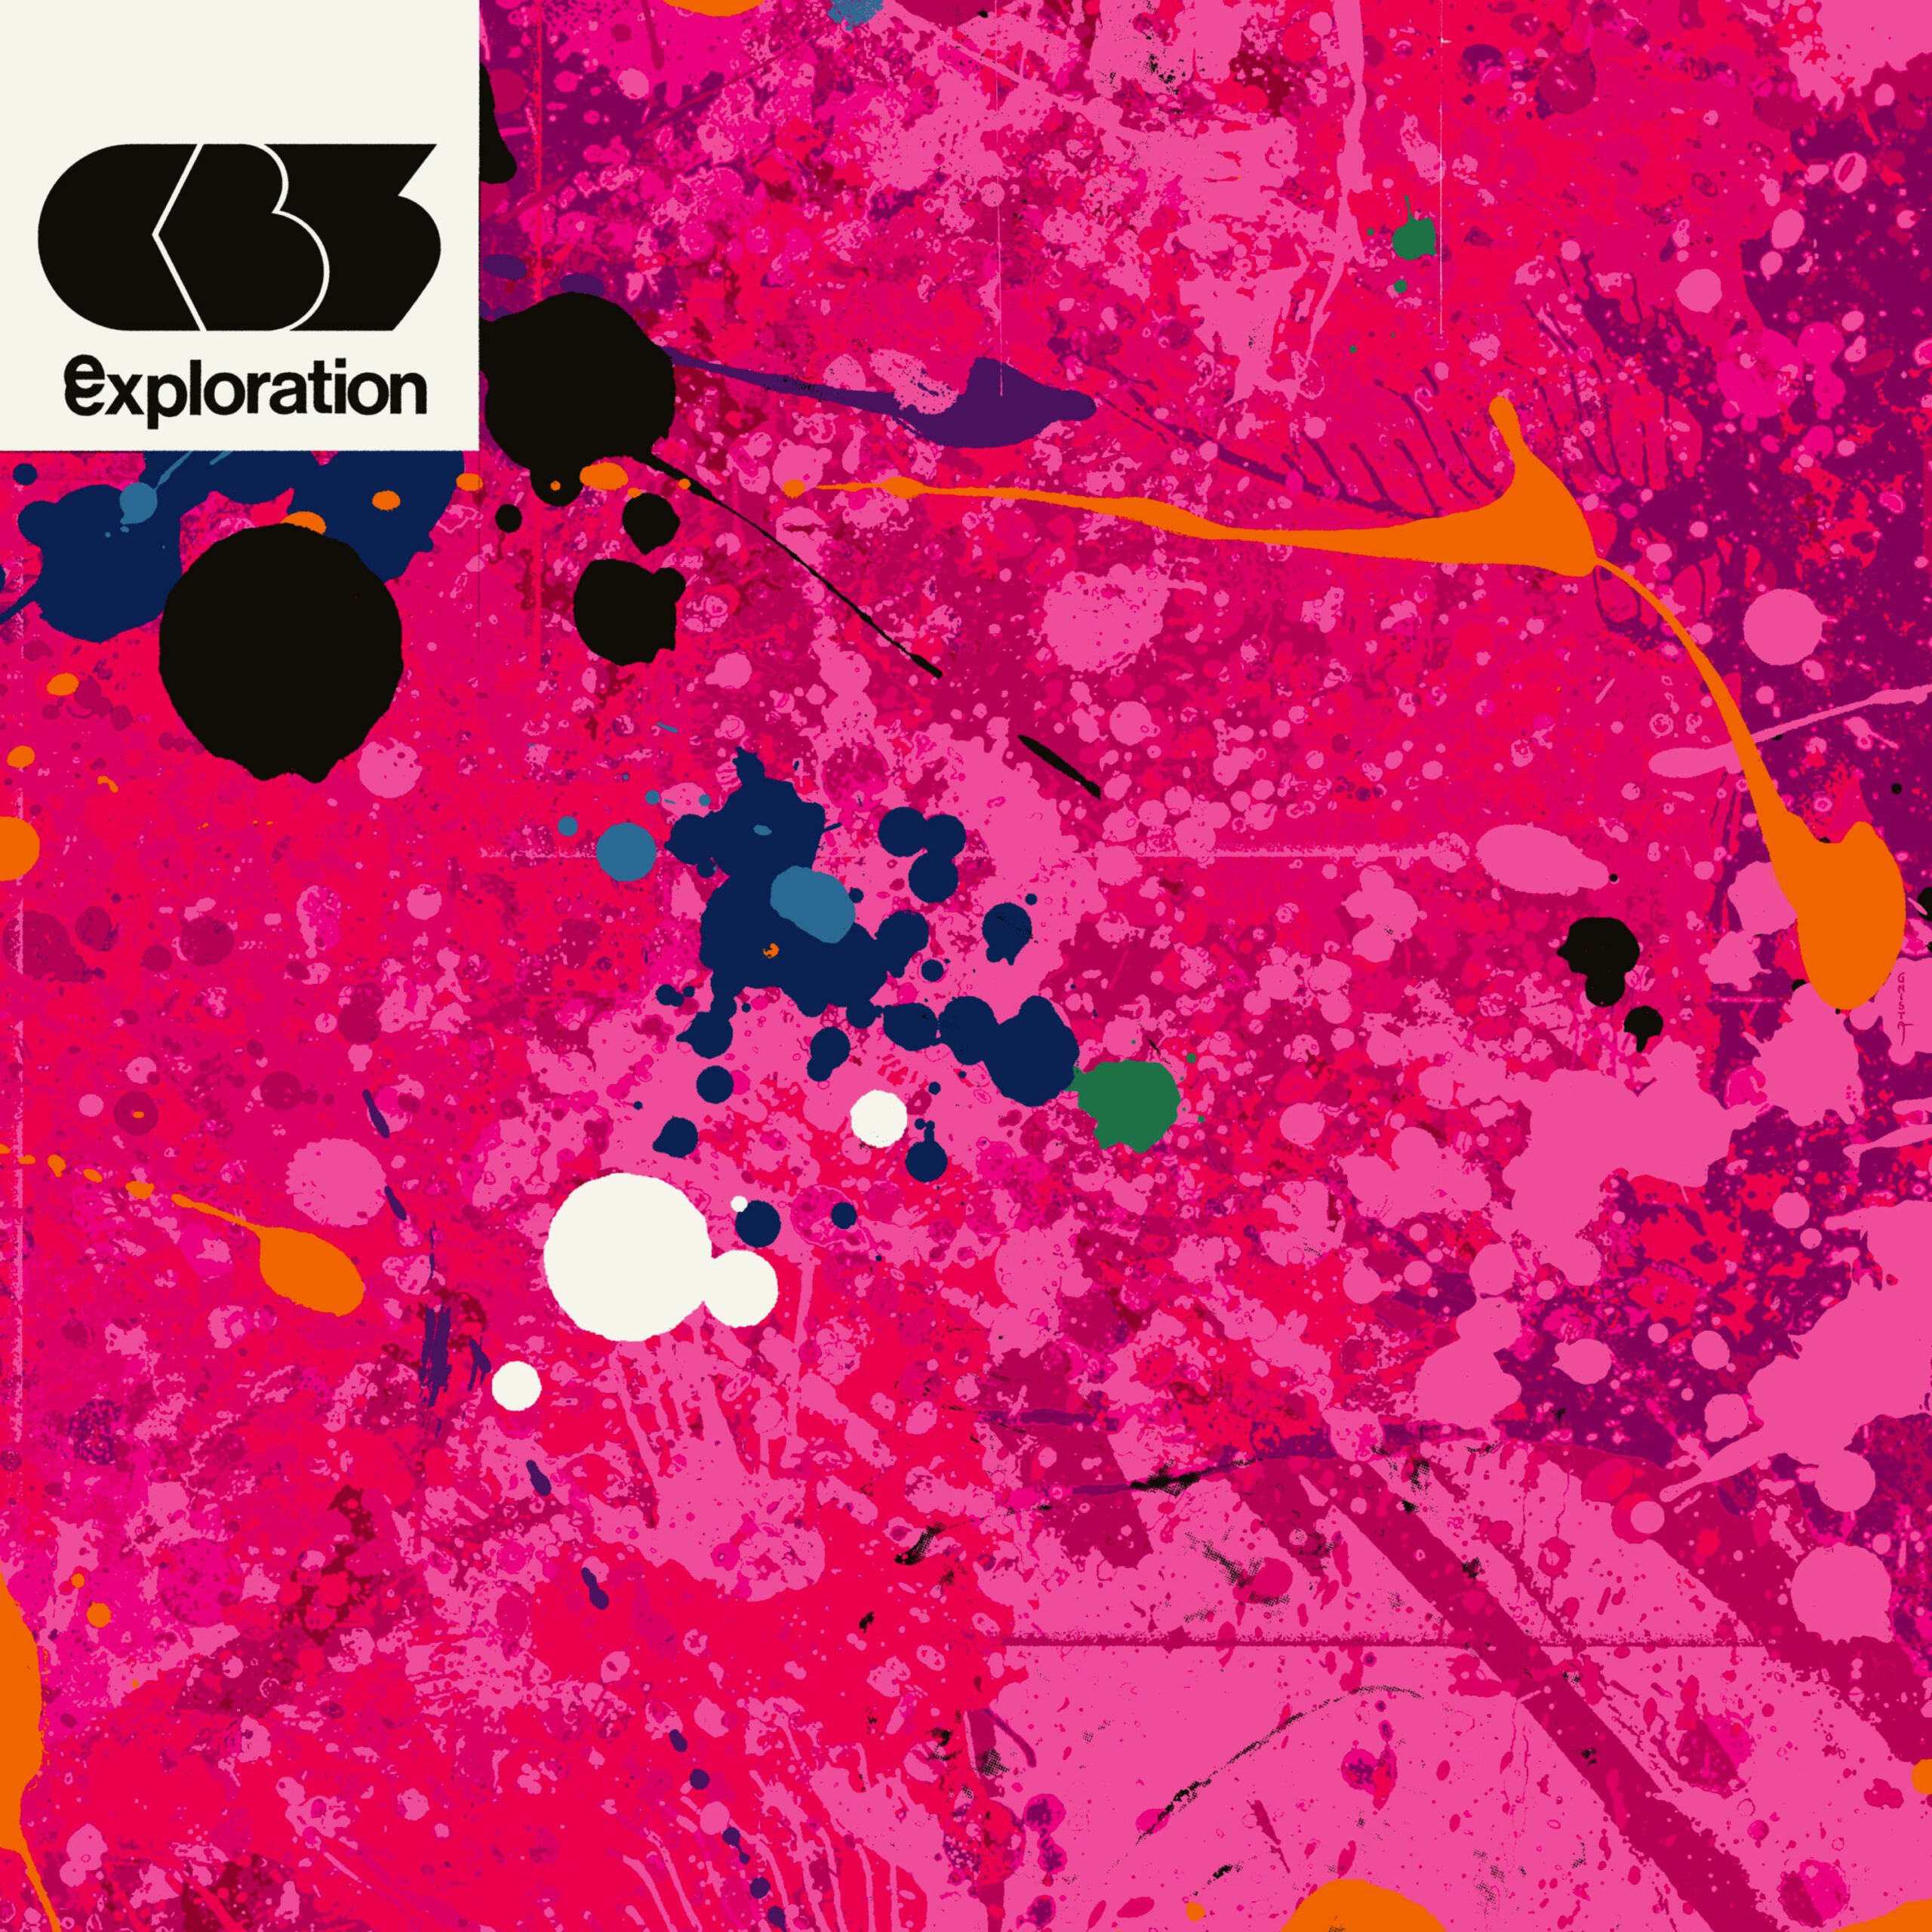 CB3 – Exploration